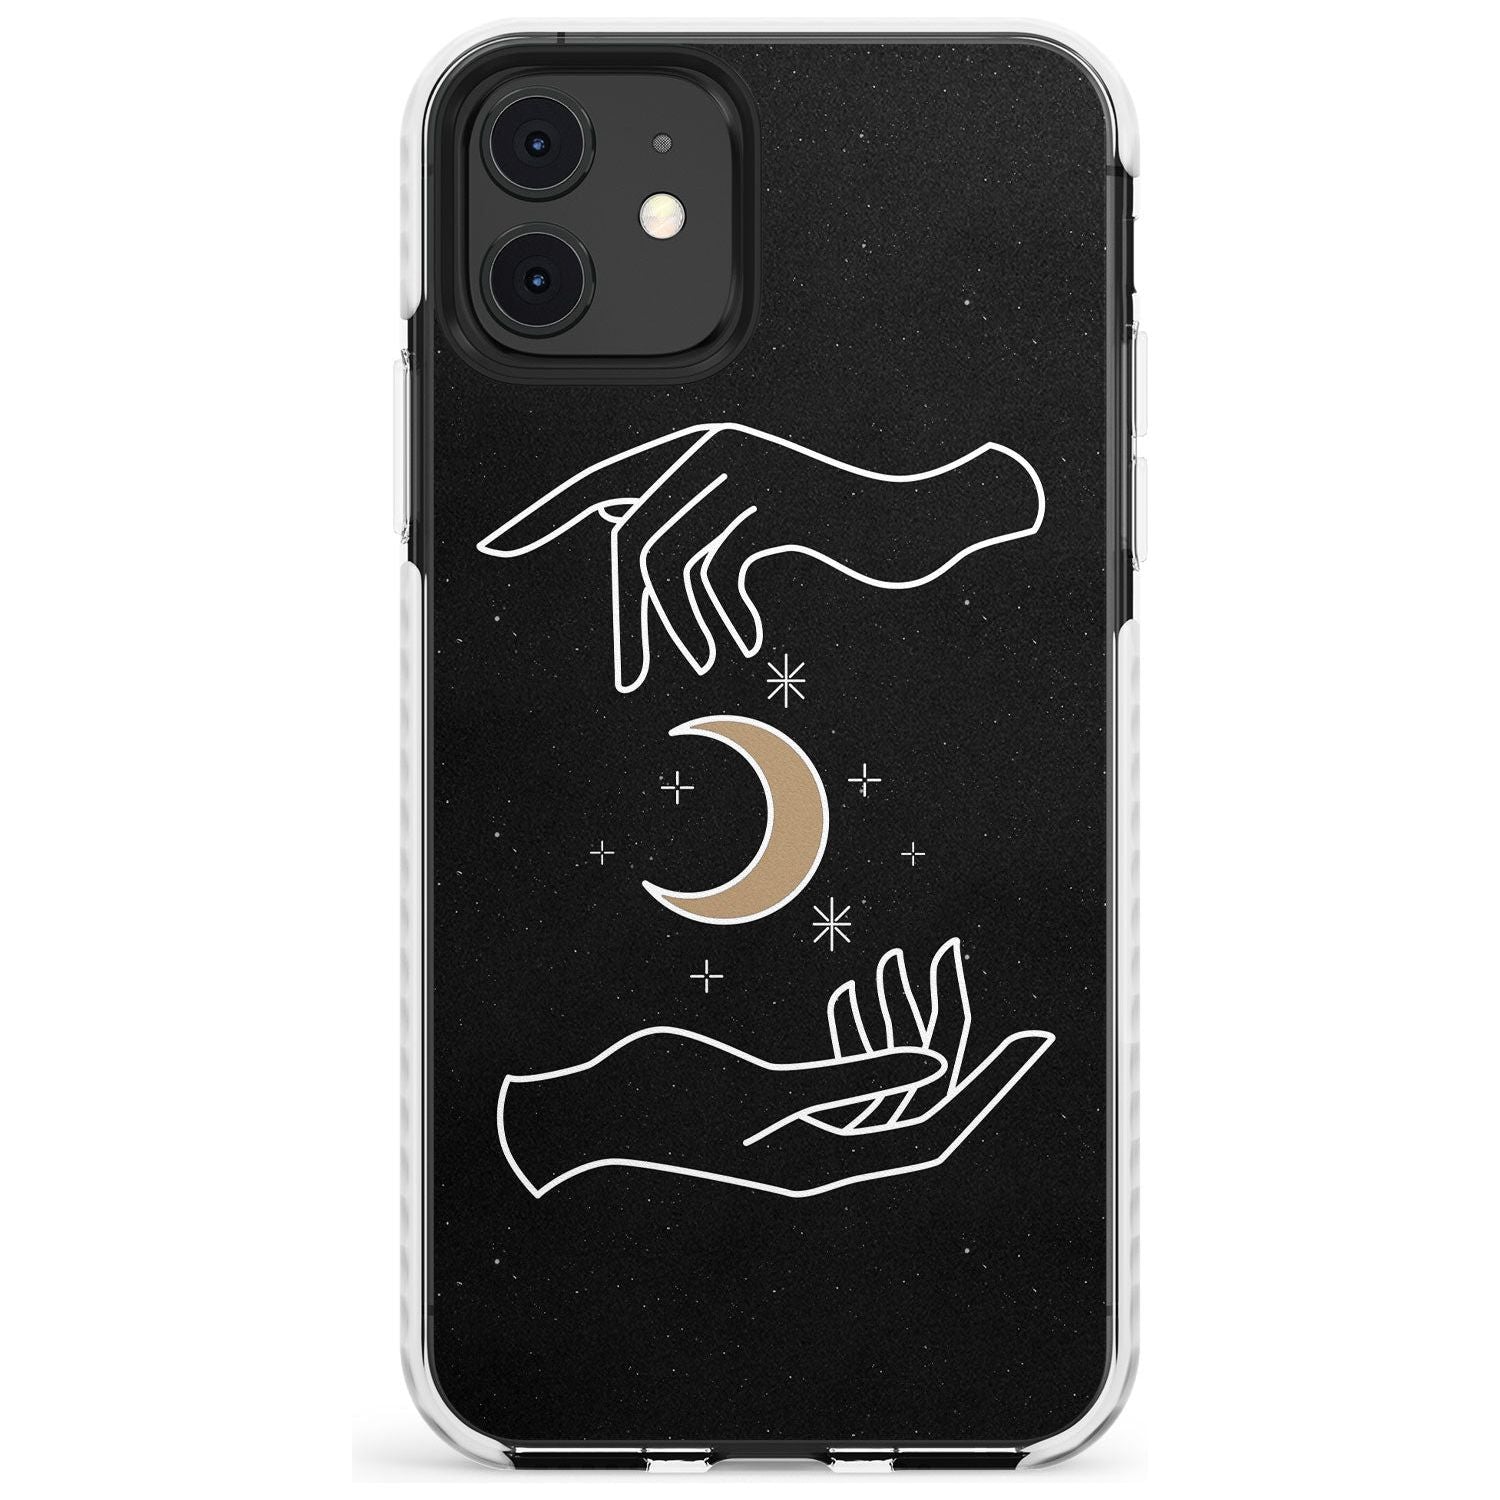 Hands Surrounding Moon Slim TPU Phone Case for iPhone 11